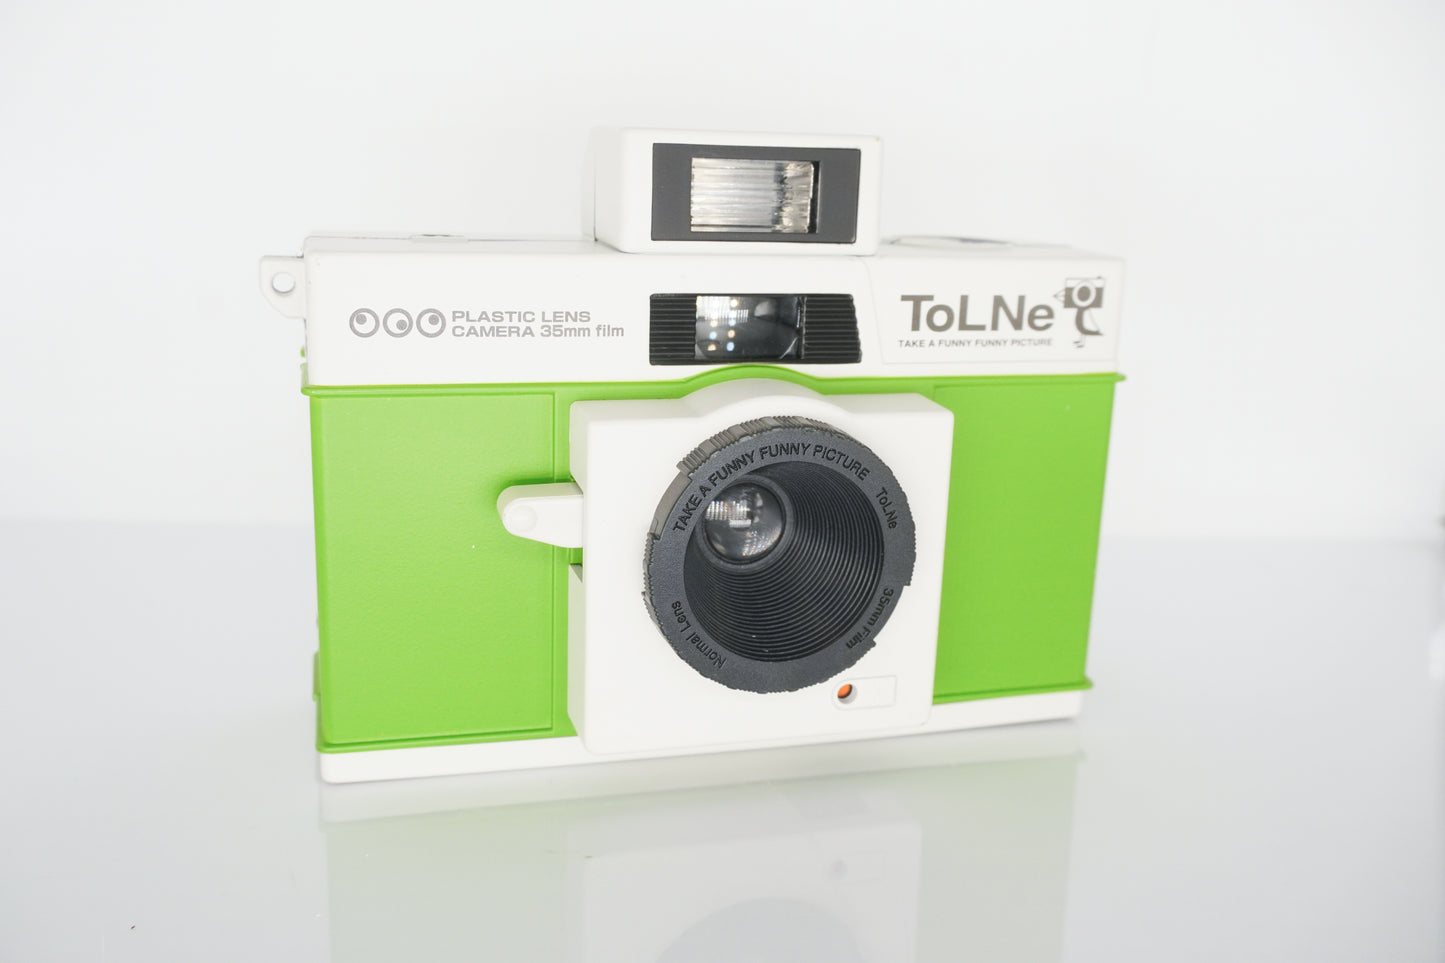 Holga K200NM Fisheye 35mm Film Reusable Camera